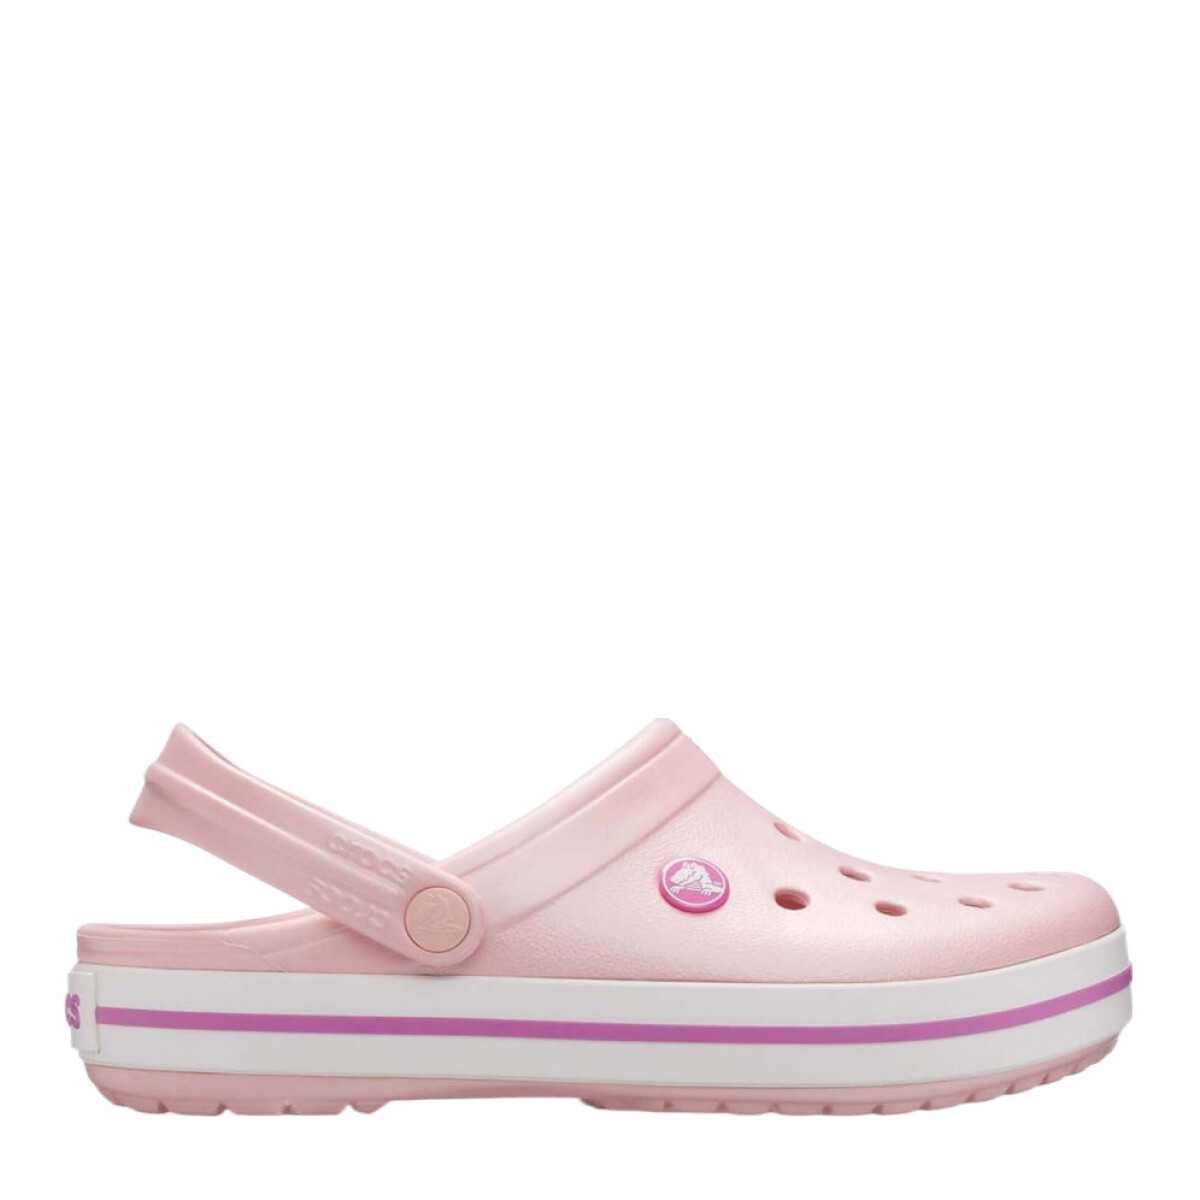 Crocband Clog Kids Crocs - Pink 